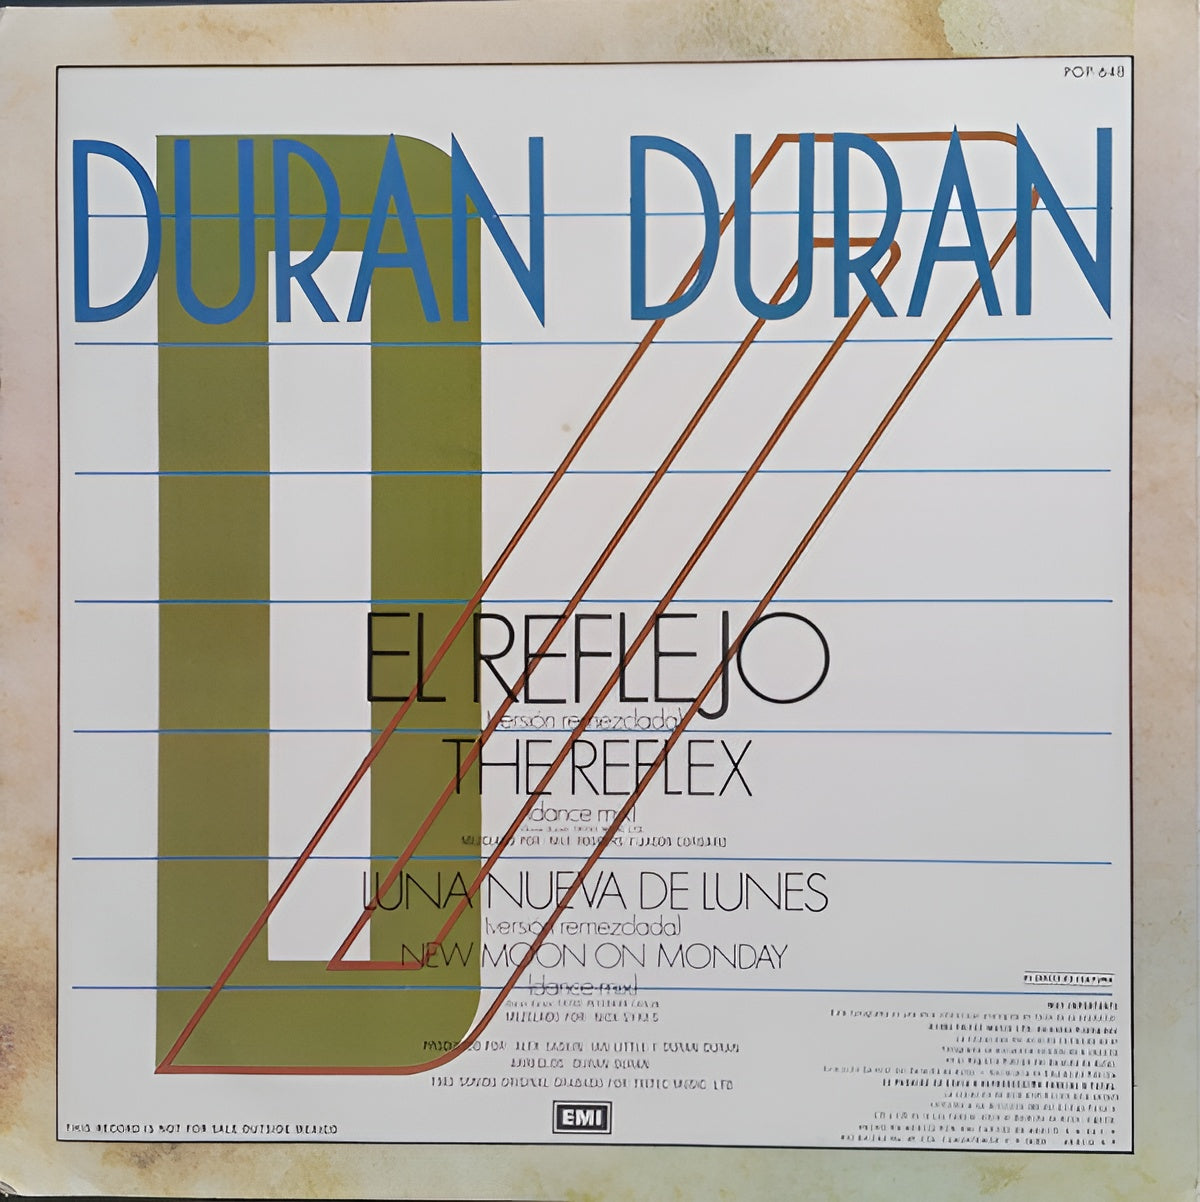 Duran Duran ‎– The Reflex (The Dance Mix)